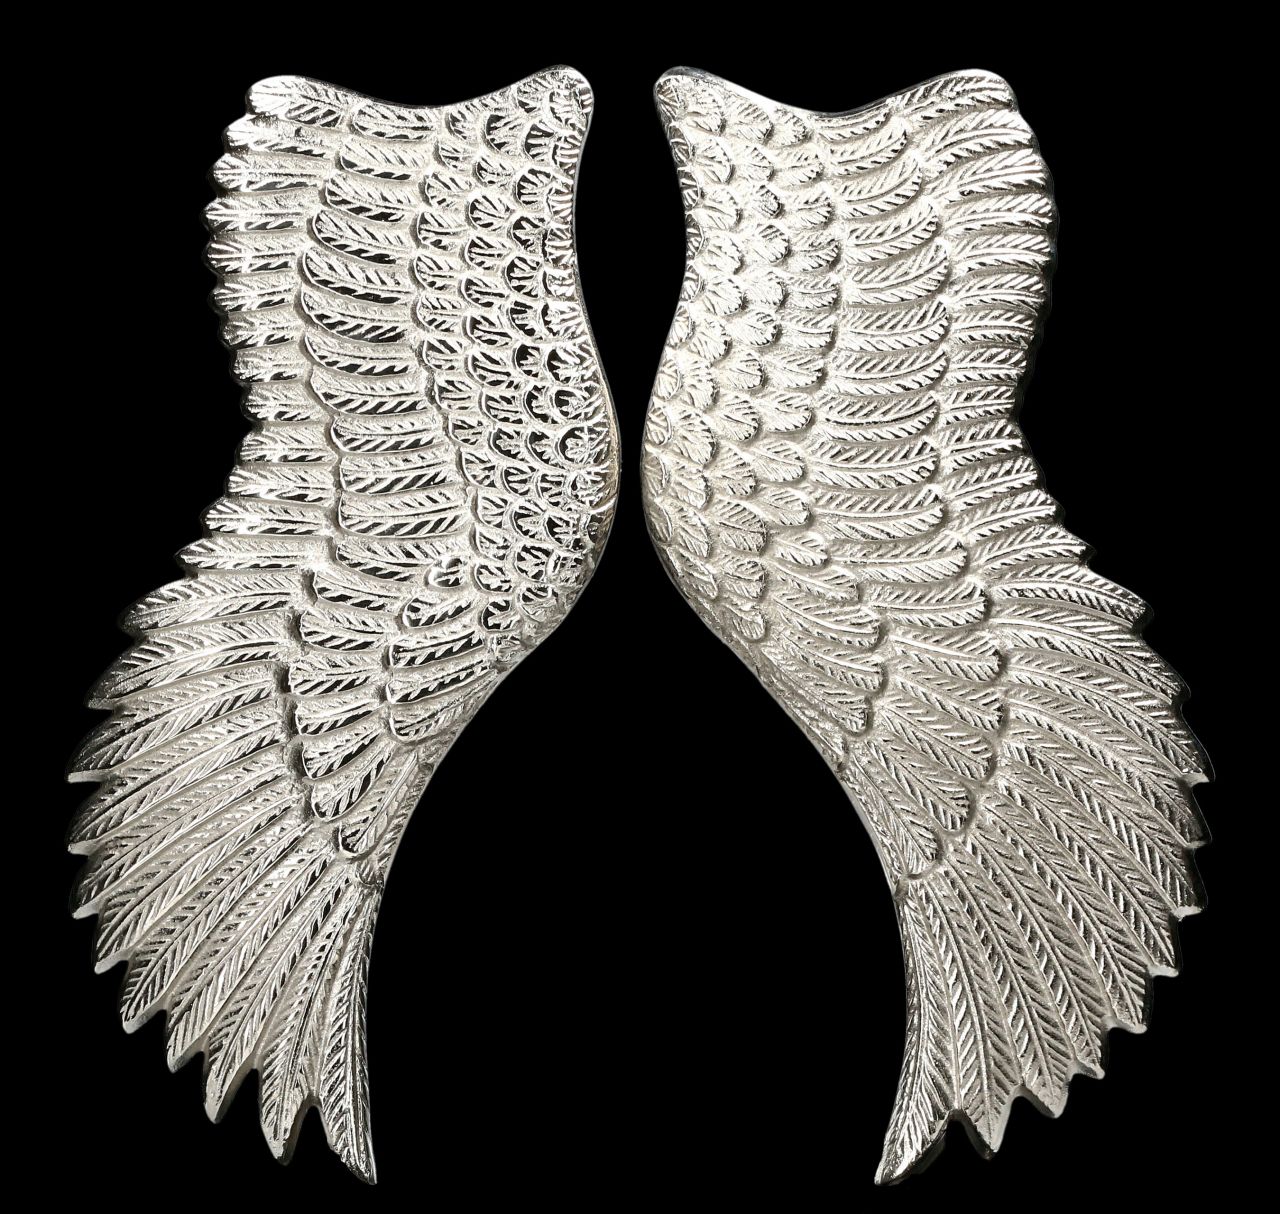 Wall Decoration - Angel Wings made of Aluminium